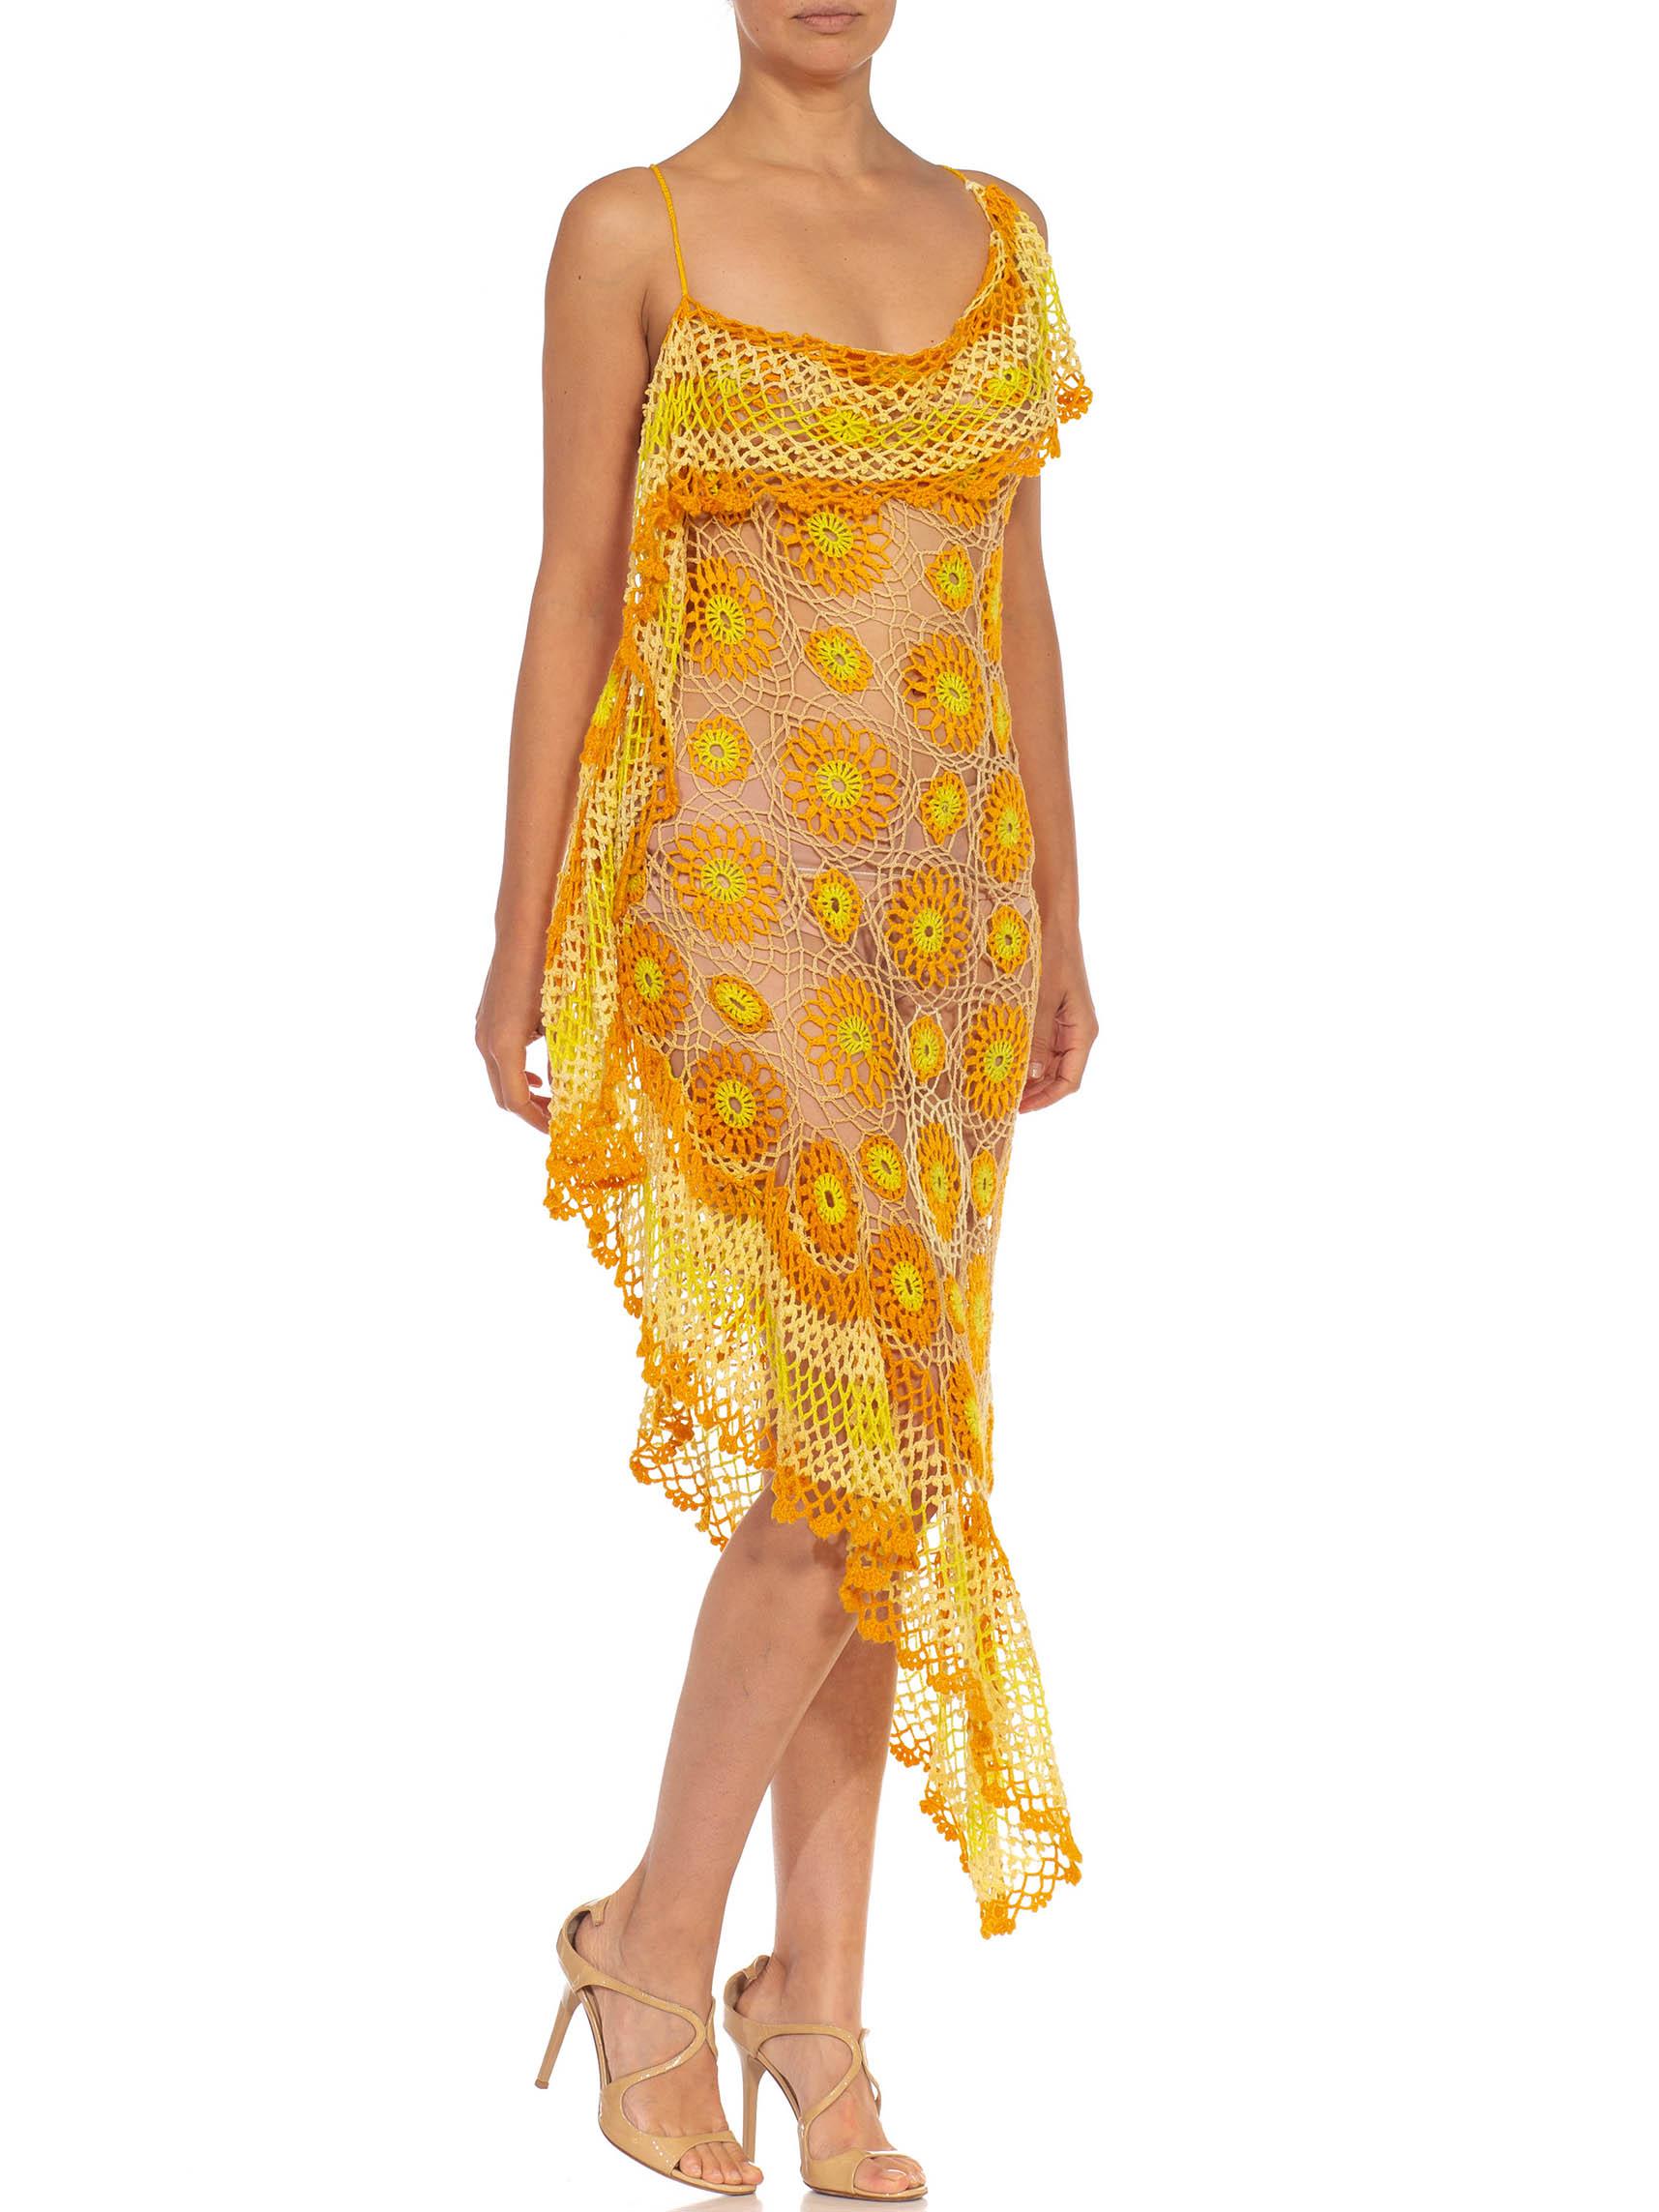 Women's Morphew Collection Orange Yellow & White Cotton Floral Crochet Sexy Dress